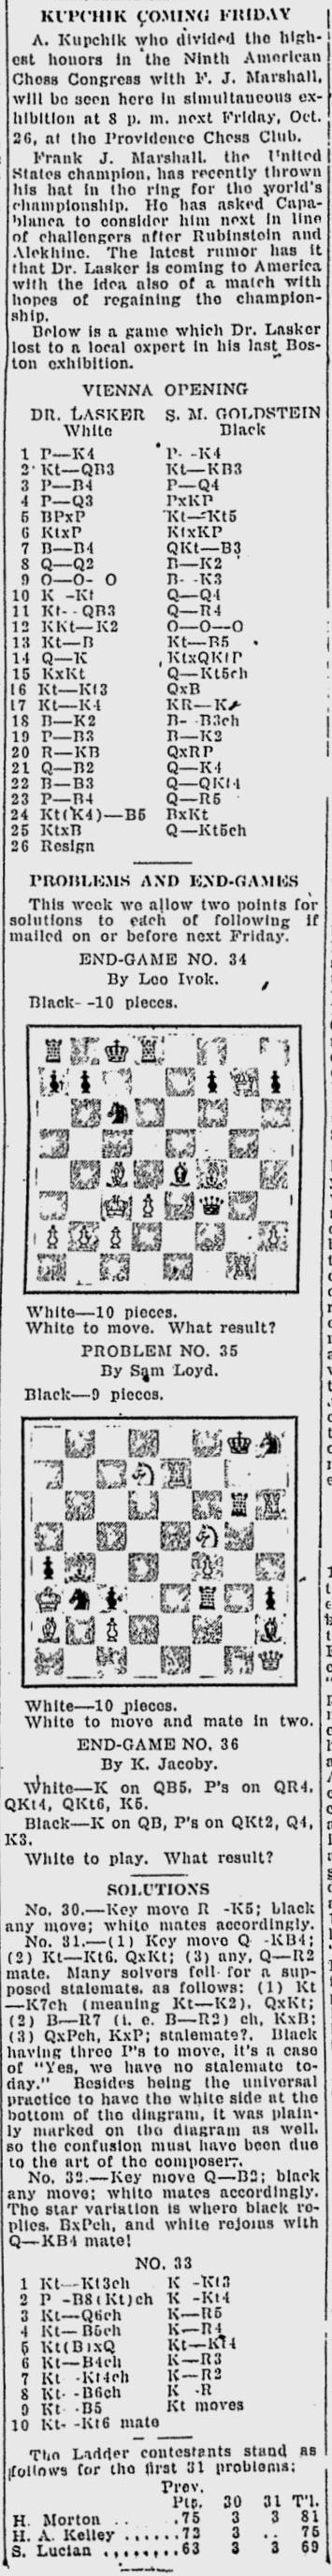 1923.10.20-02 Providence News.jpg